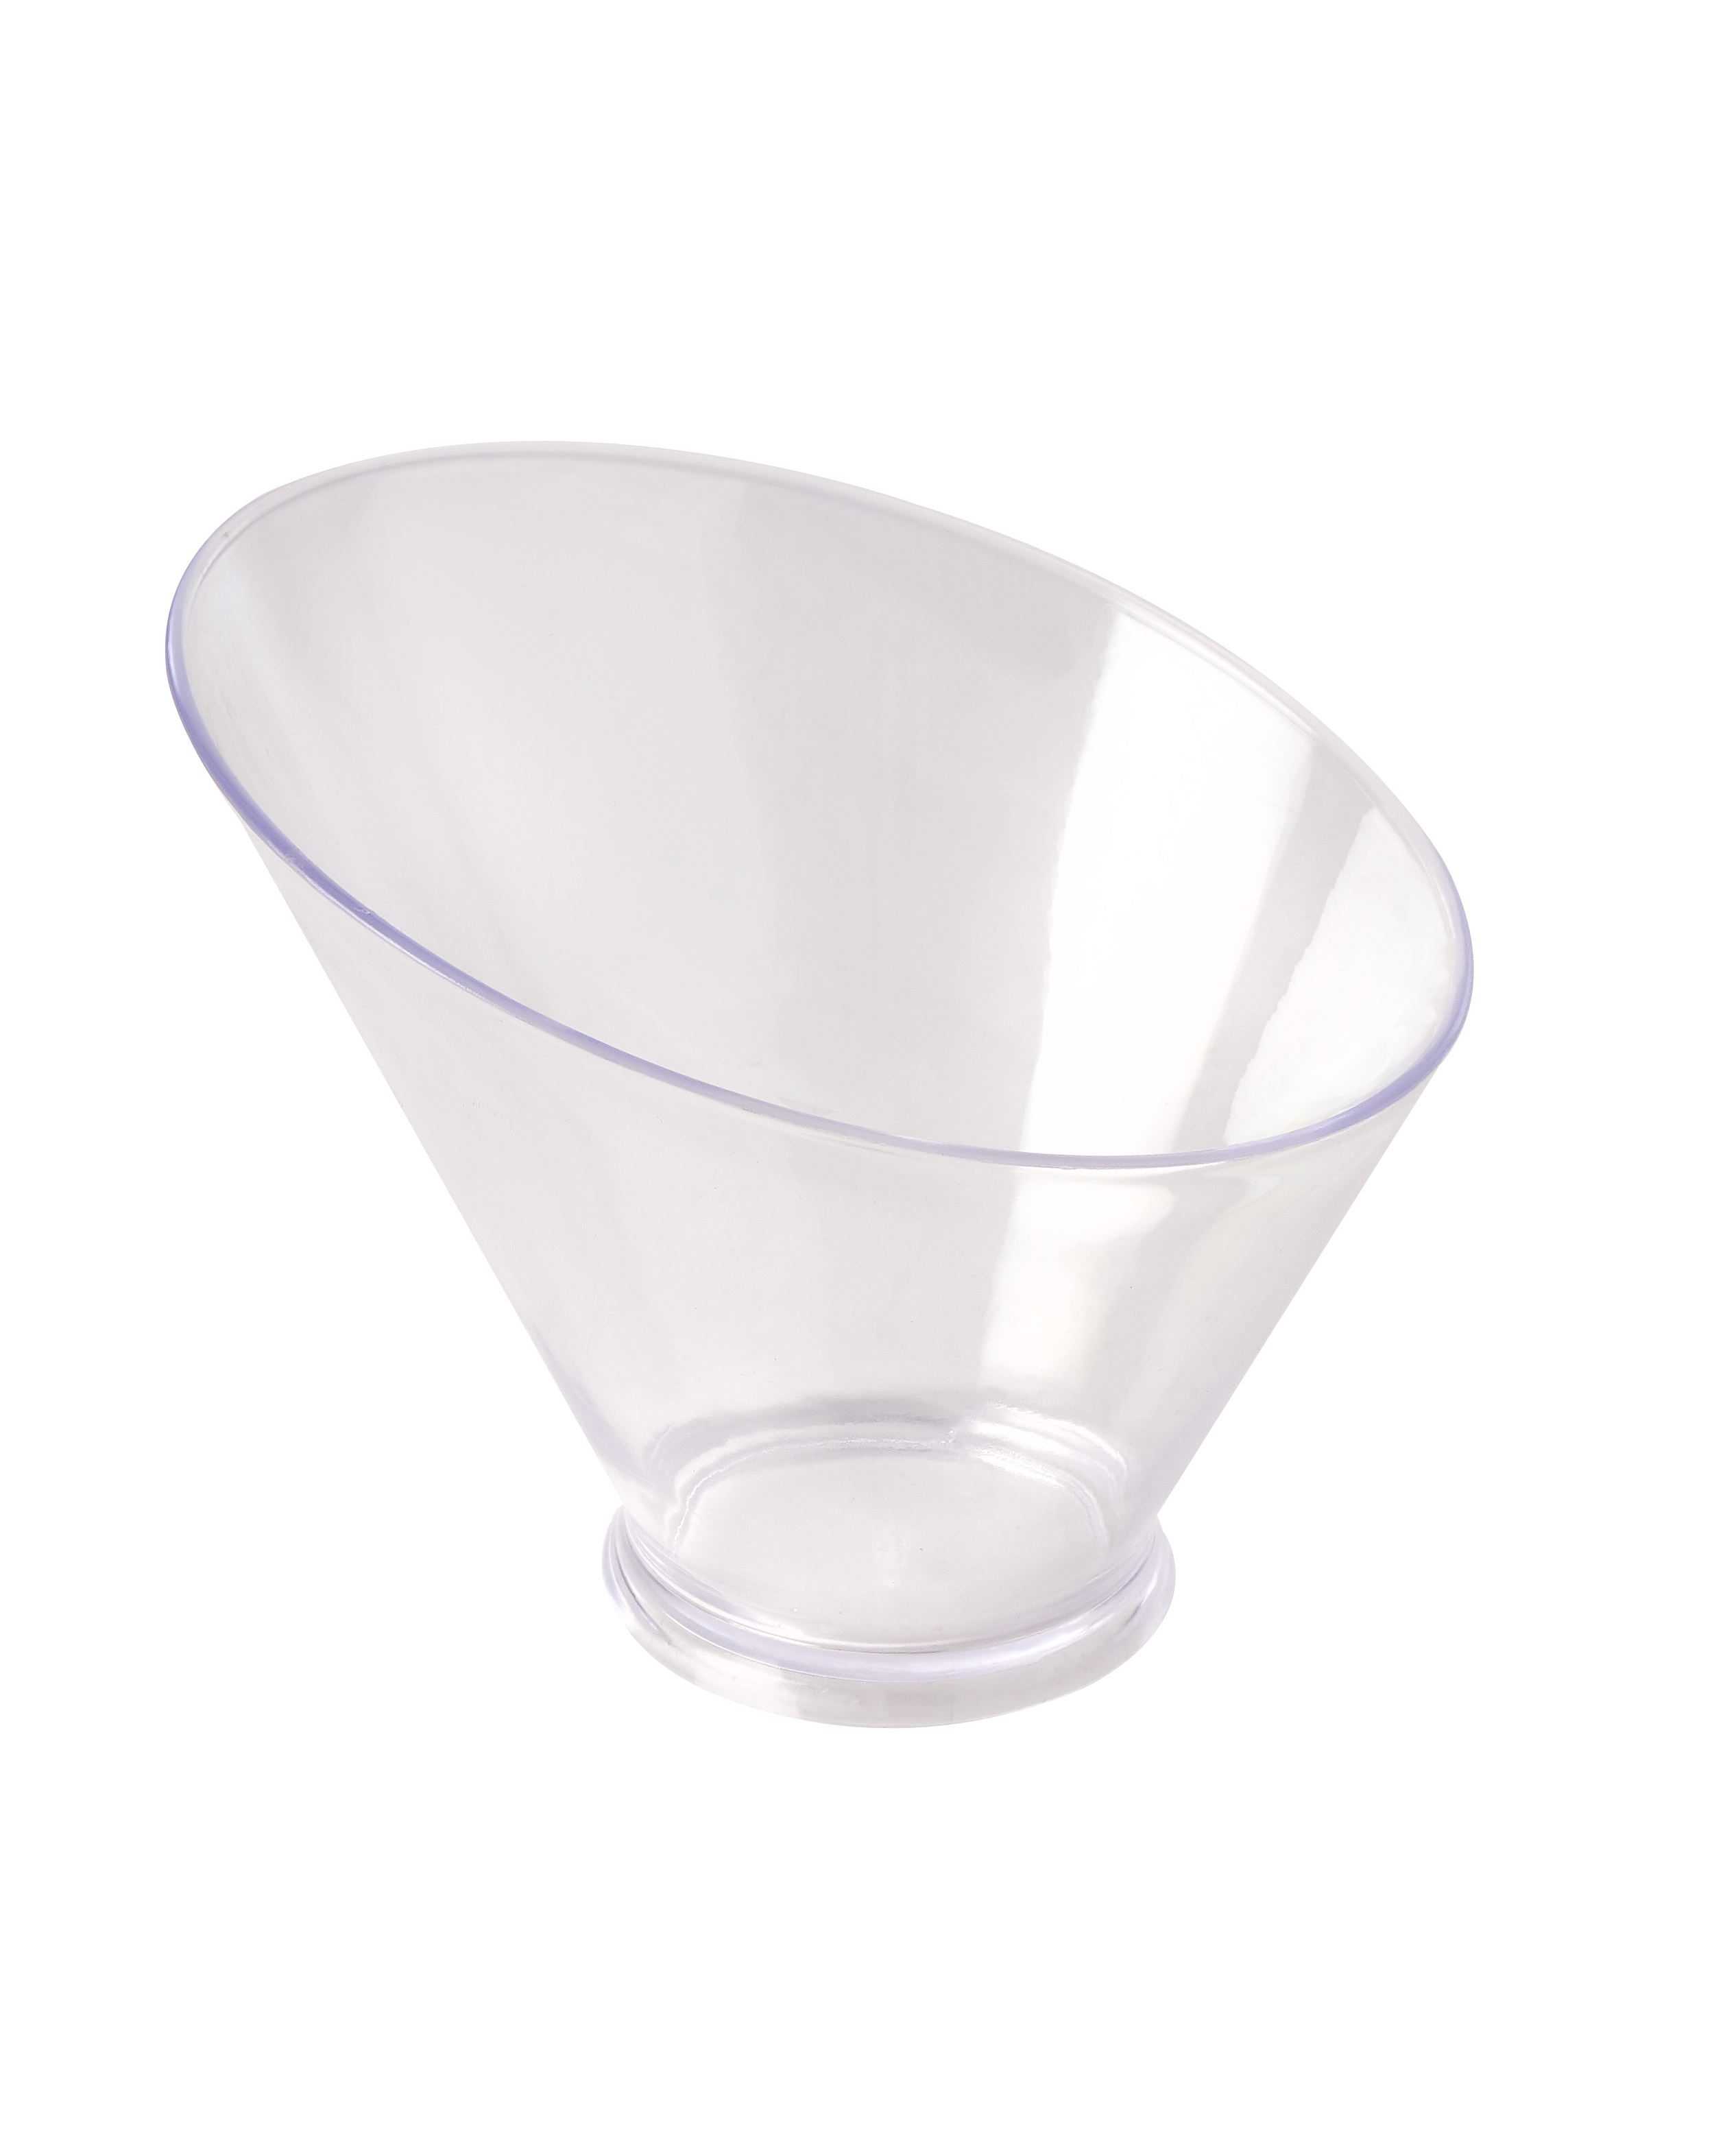 Plastic Angled Serving Bowl